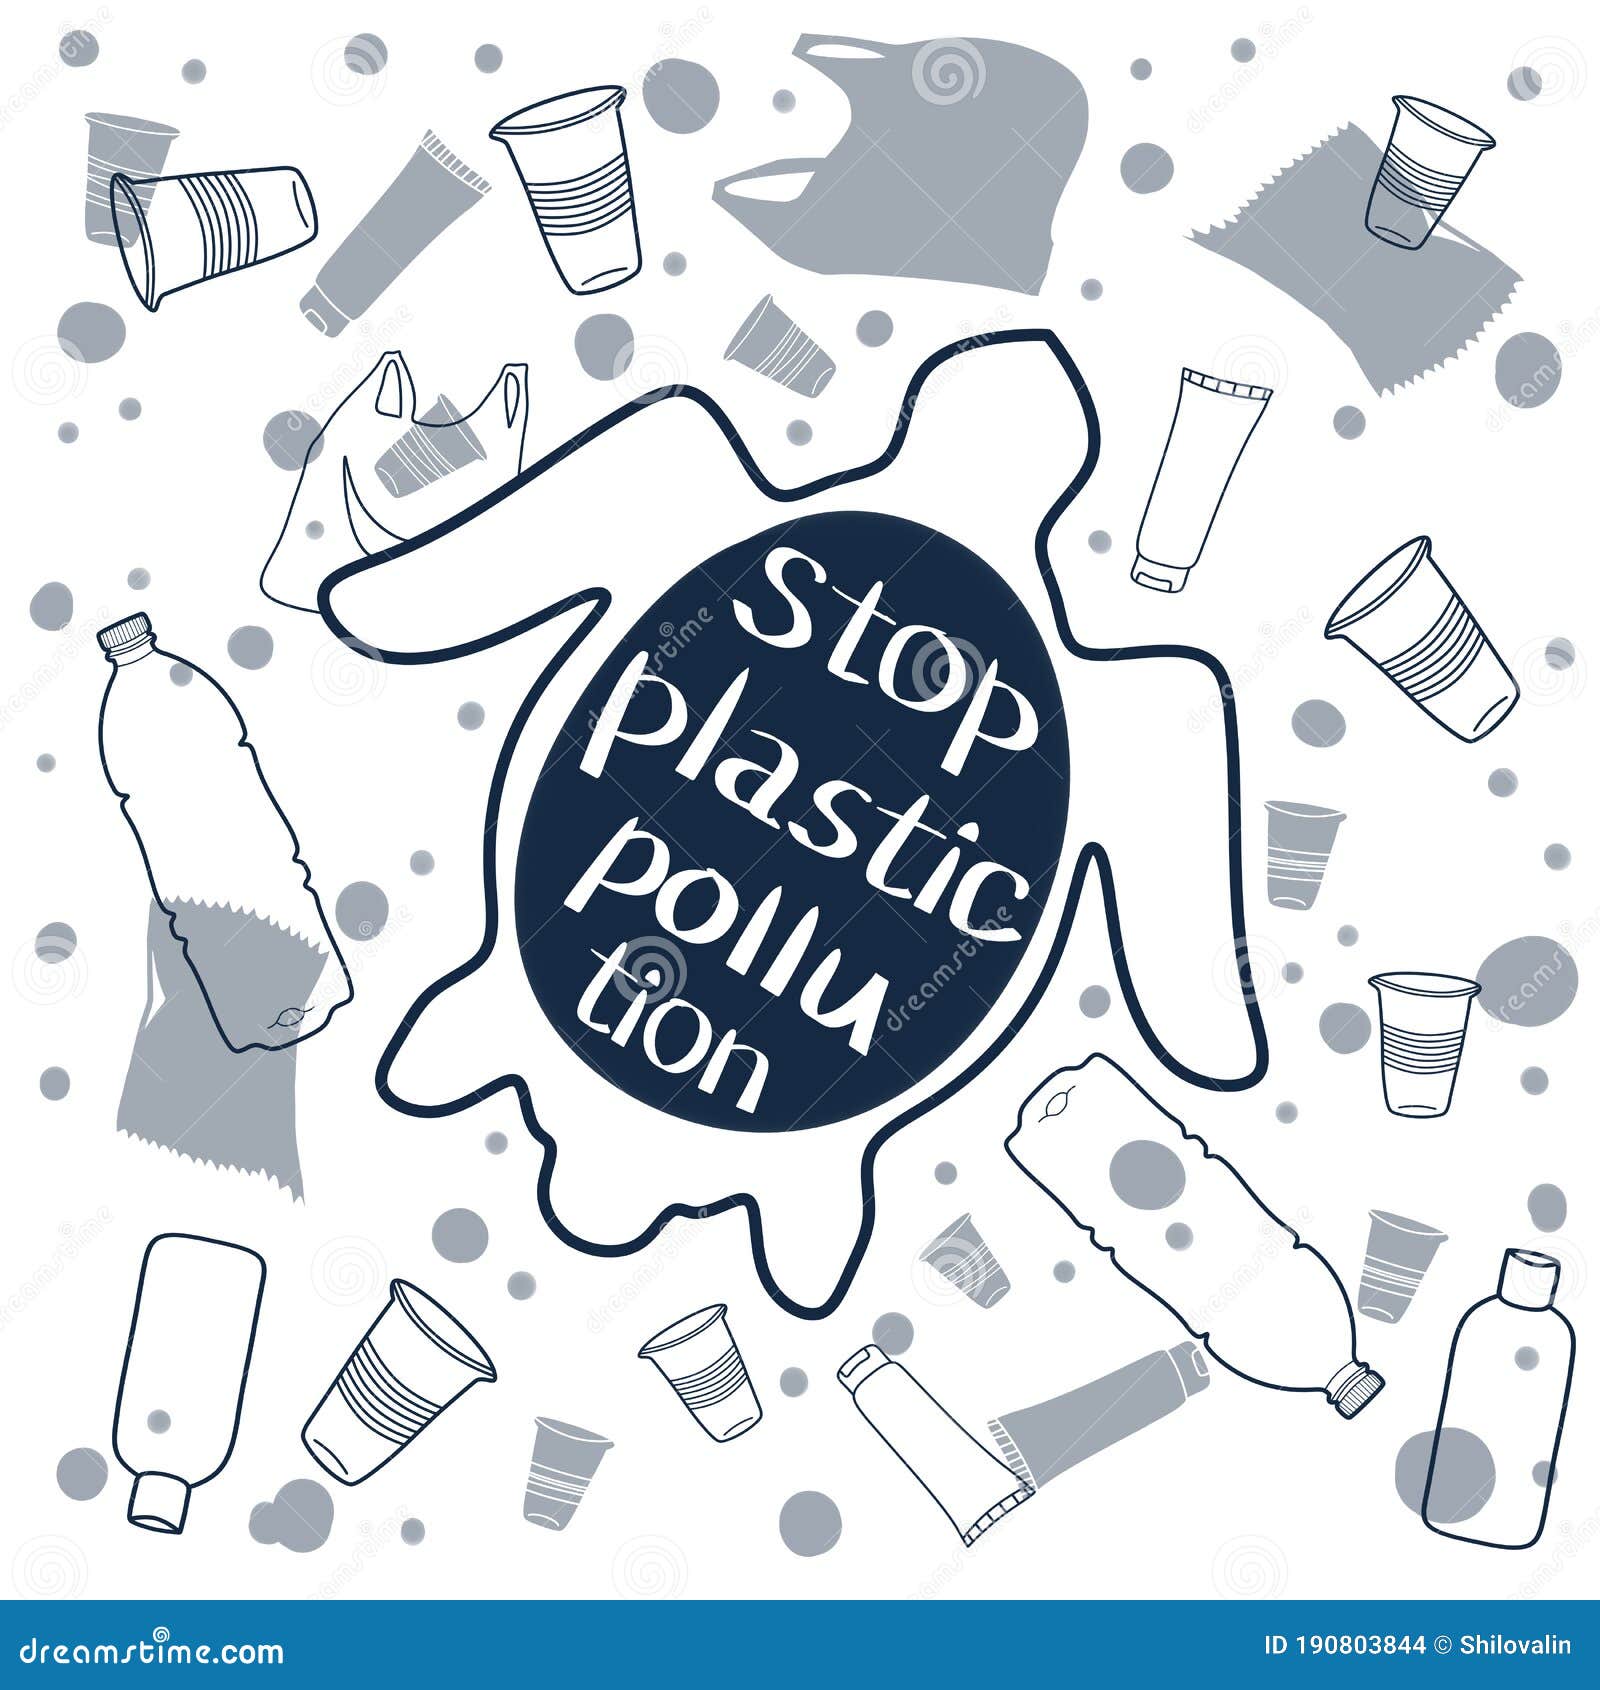 Premium Vector | Stop ocean plastic pollution. poster ecological campaign